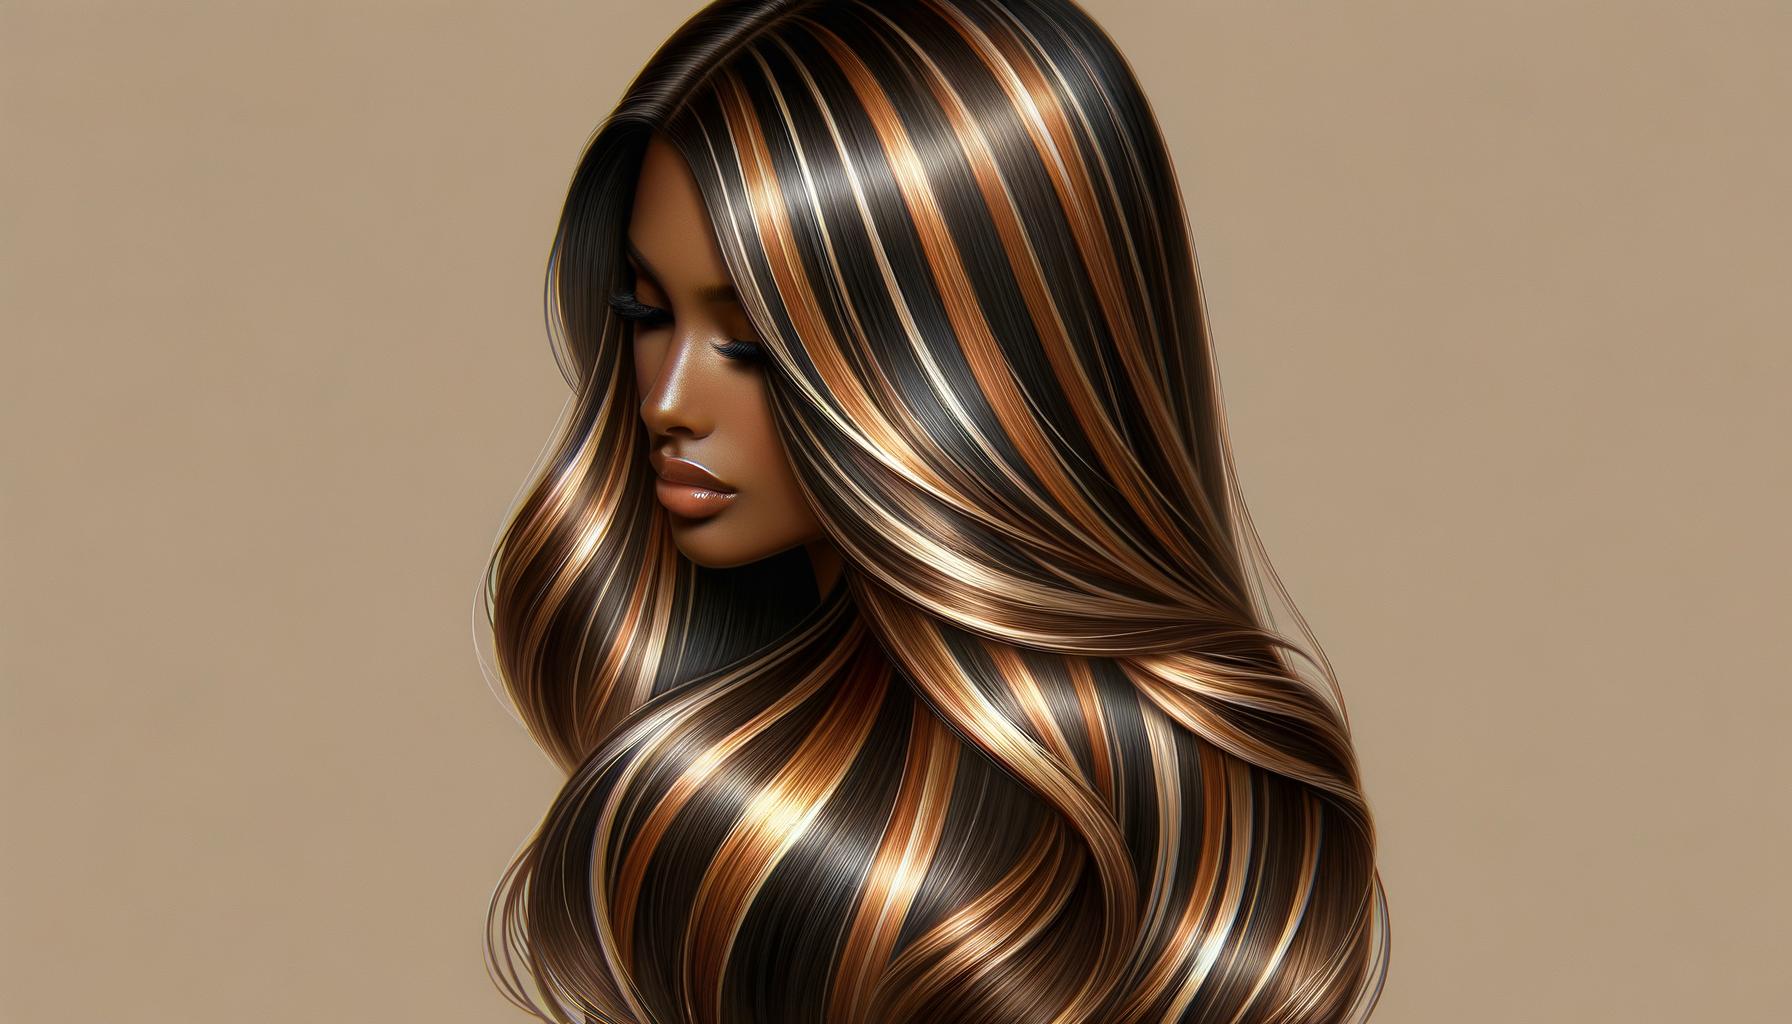 Chic brown hair featuring beautiful caramel highlights